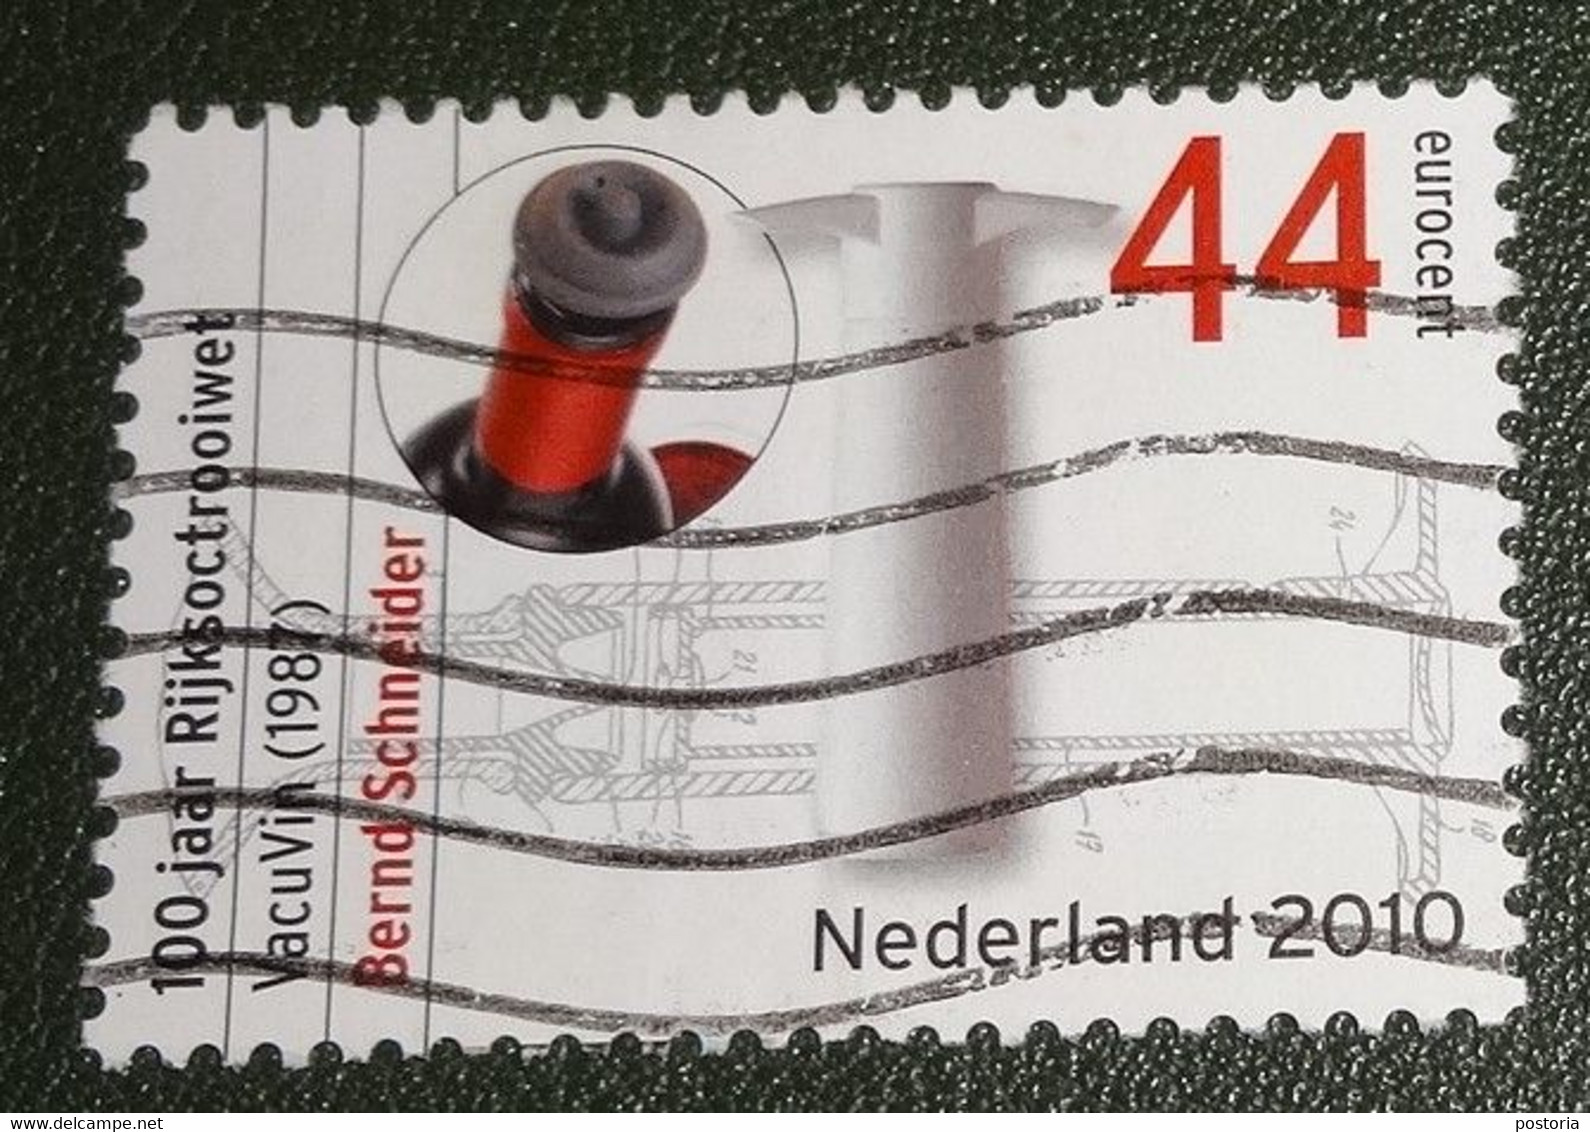 Nederland - NVPH - 2700 - 2010 - Gebruikt - Cancelled - Rijksoctrooiwet - Vacuvin - Used Stamps